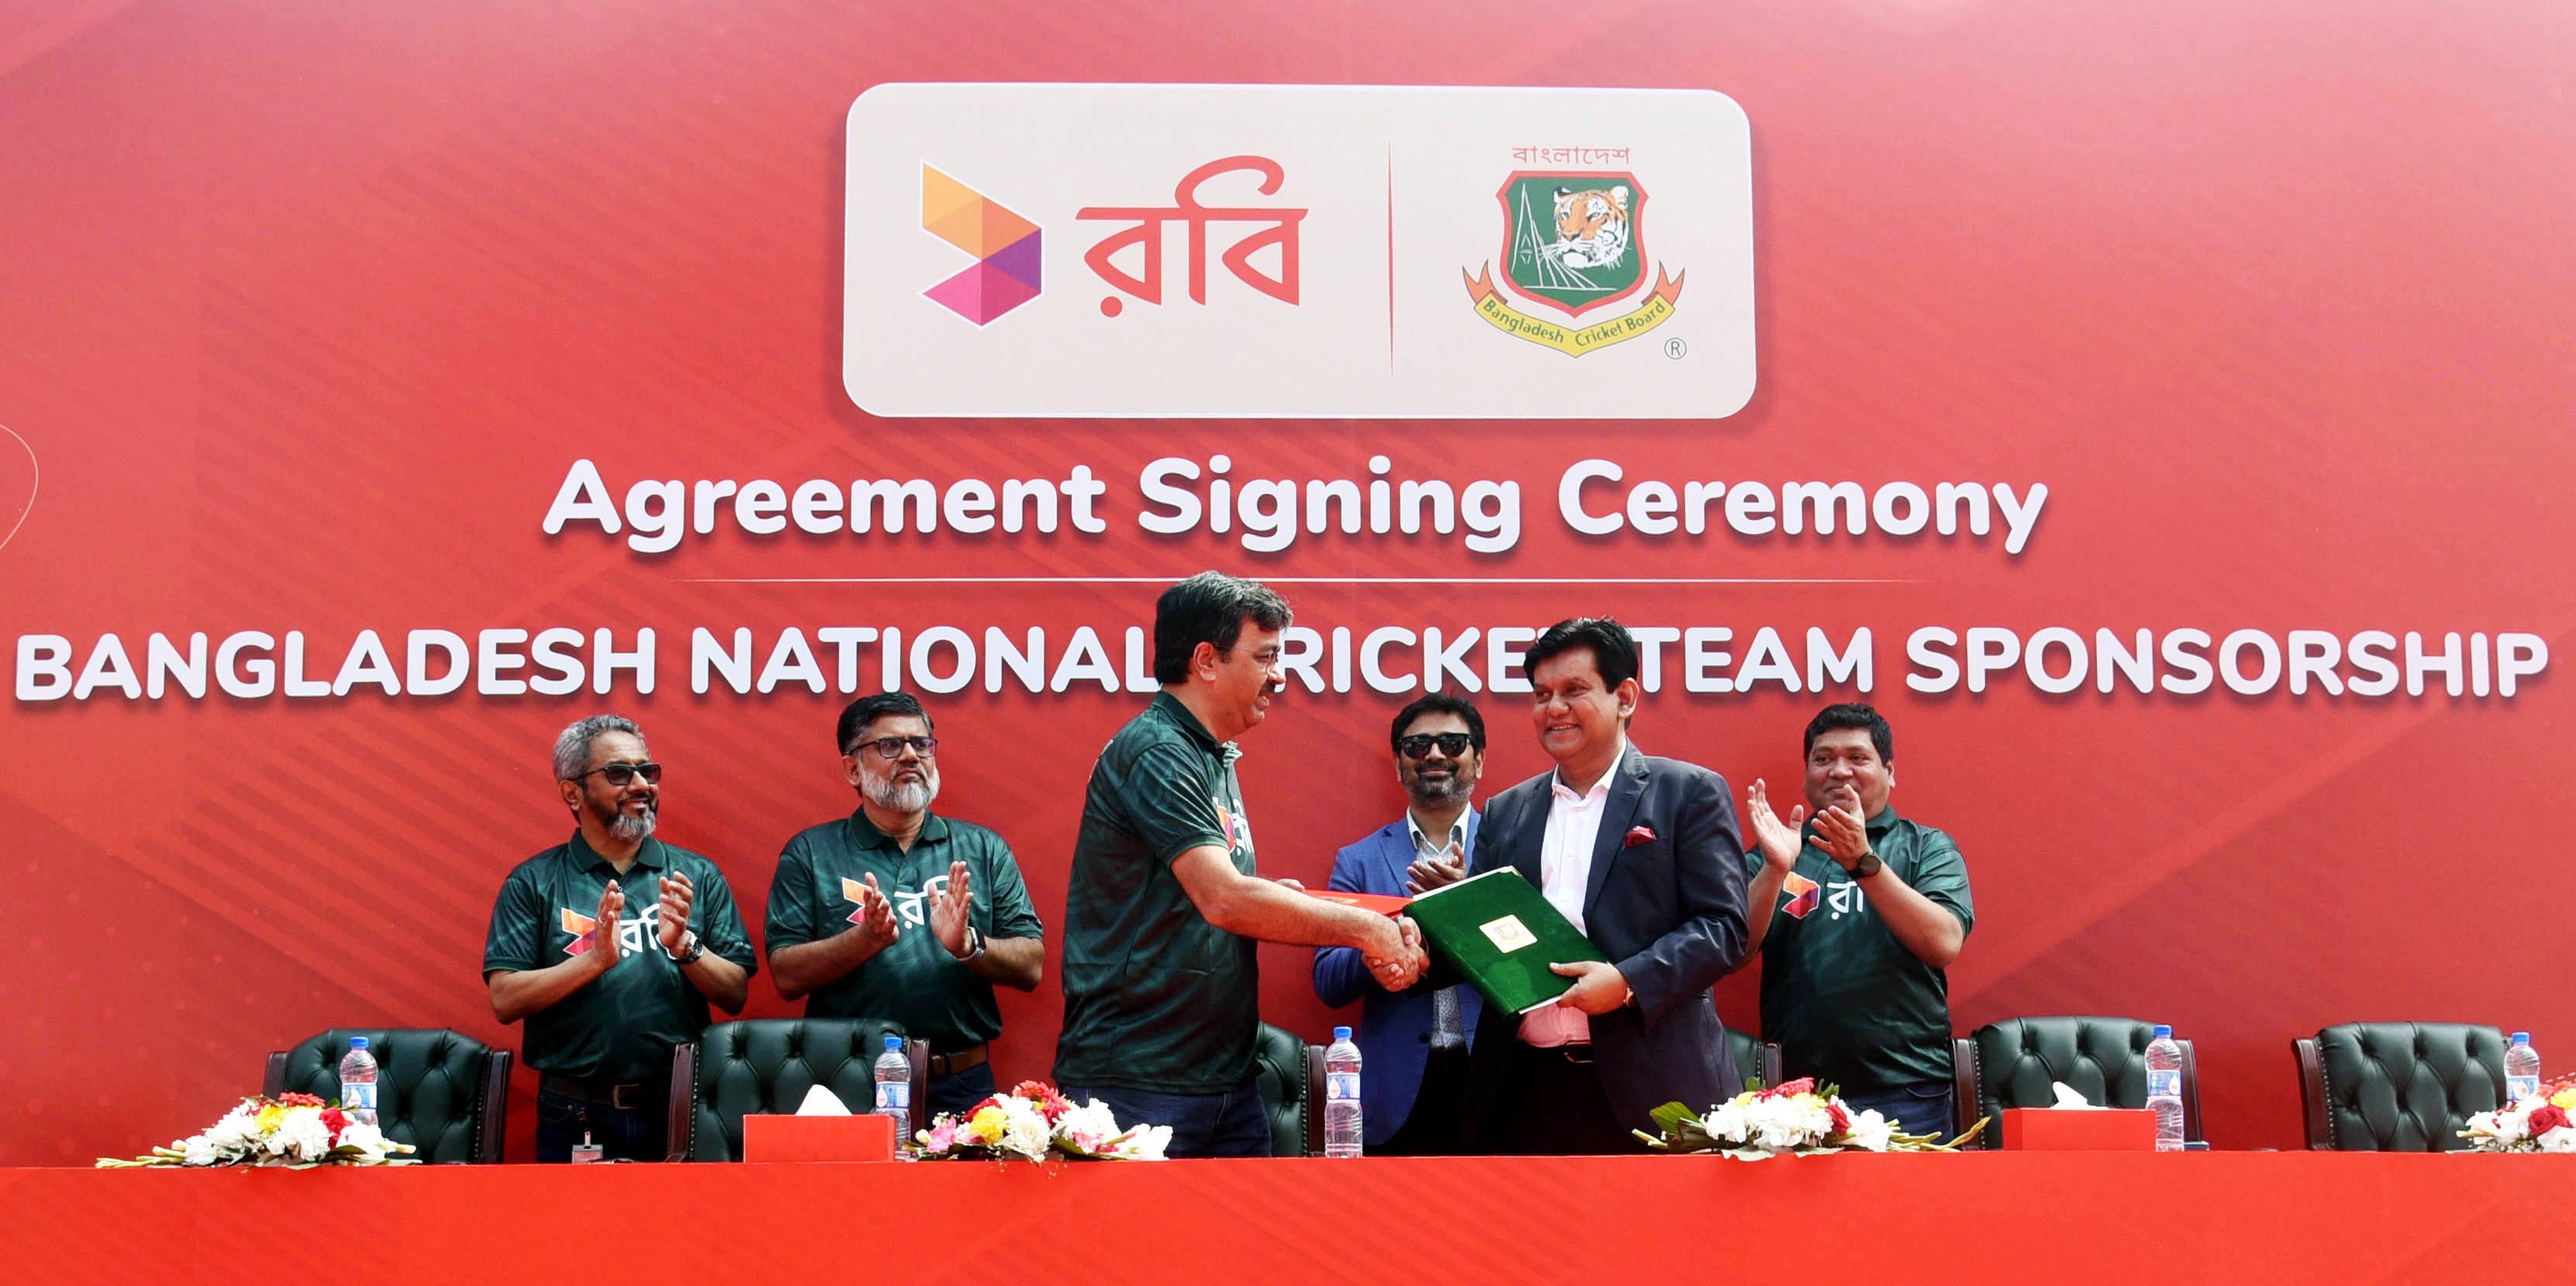 Bangladesh Cricket Board (BCB) and Robi Axiata Limited signed a sponsorship agreement